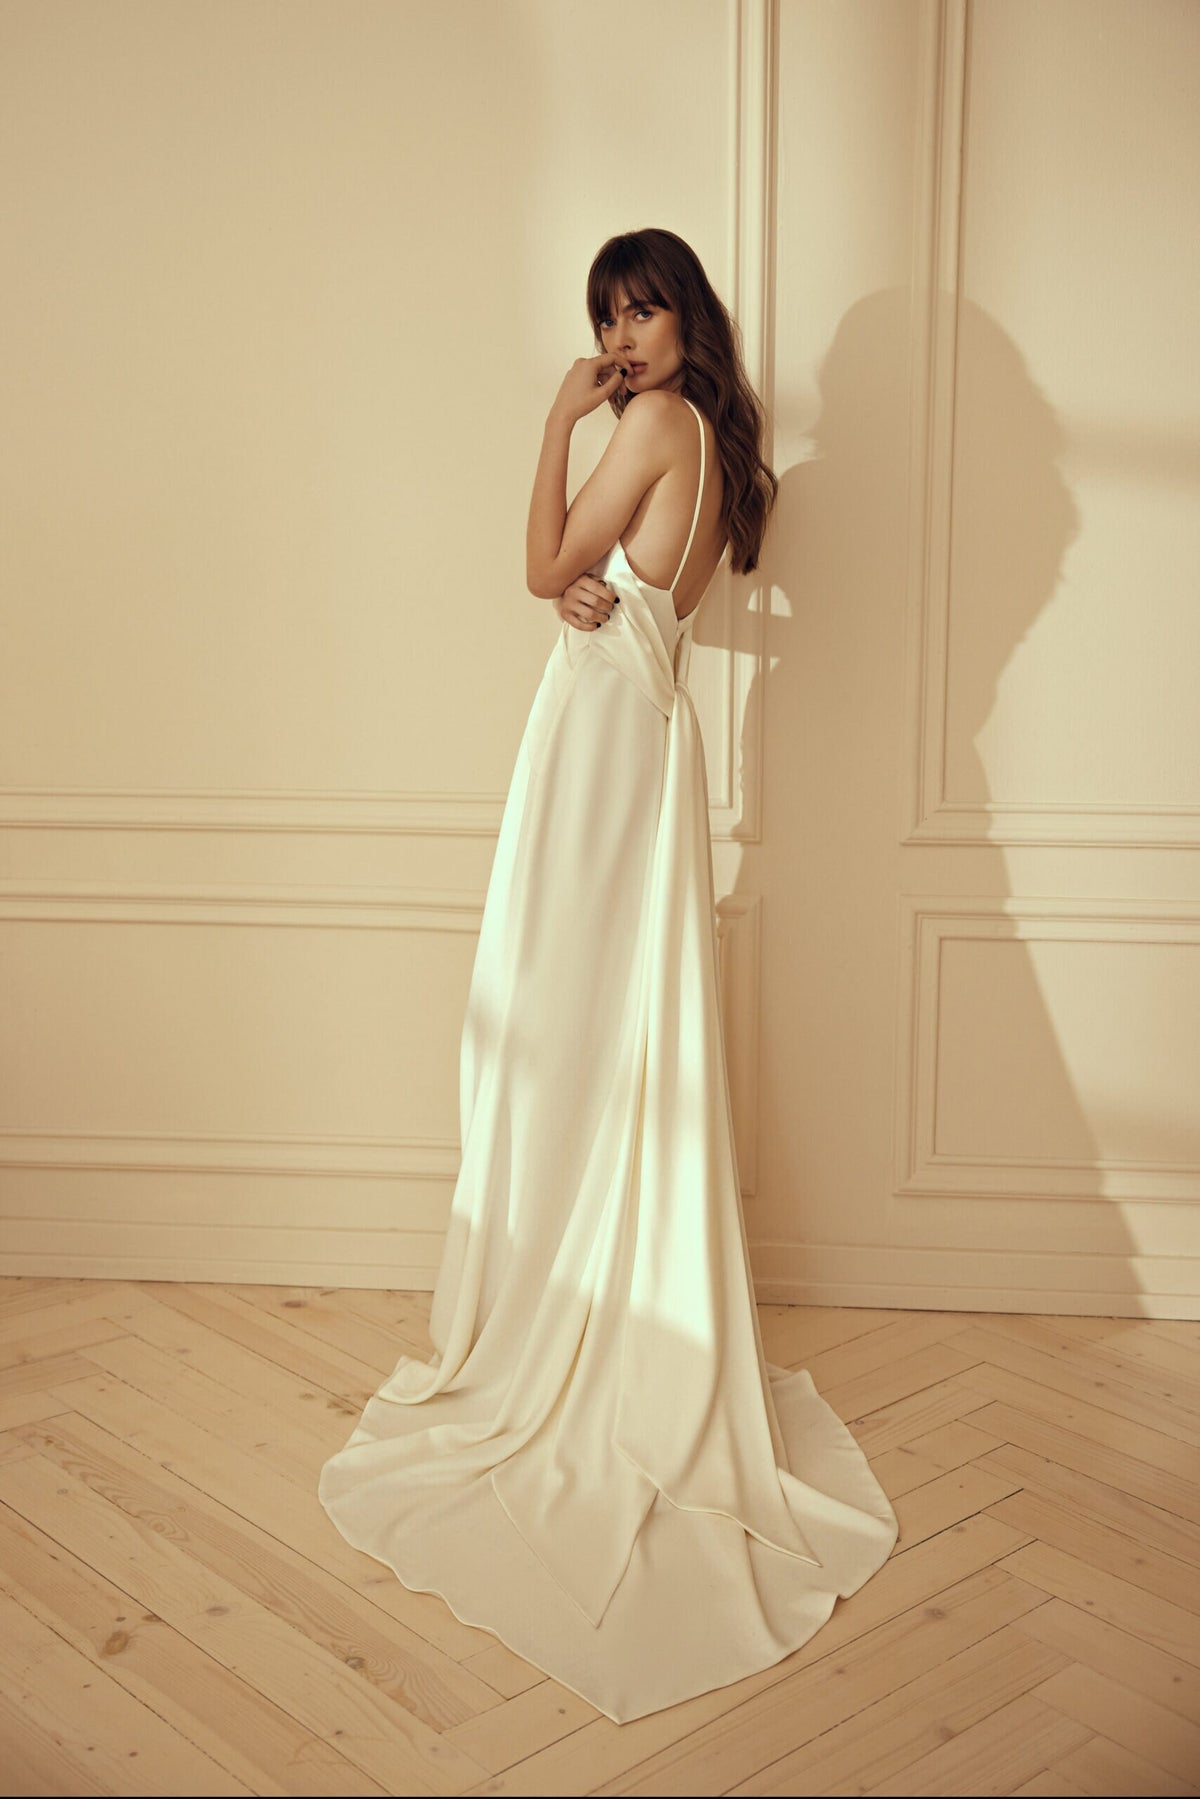 Slip Style Wedding Dress Bridal Gown with Spaghetti Straps Sleeveless Side Slit Peek A Boo Lace Low Cut V Neck Open Back Minimalist Sheath